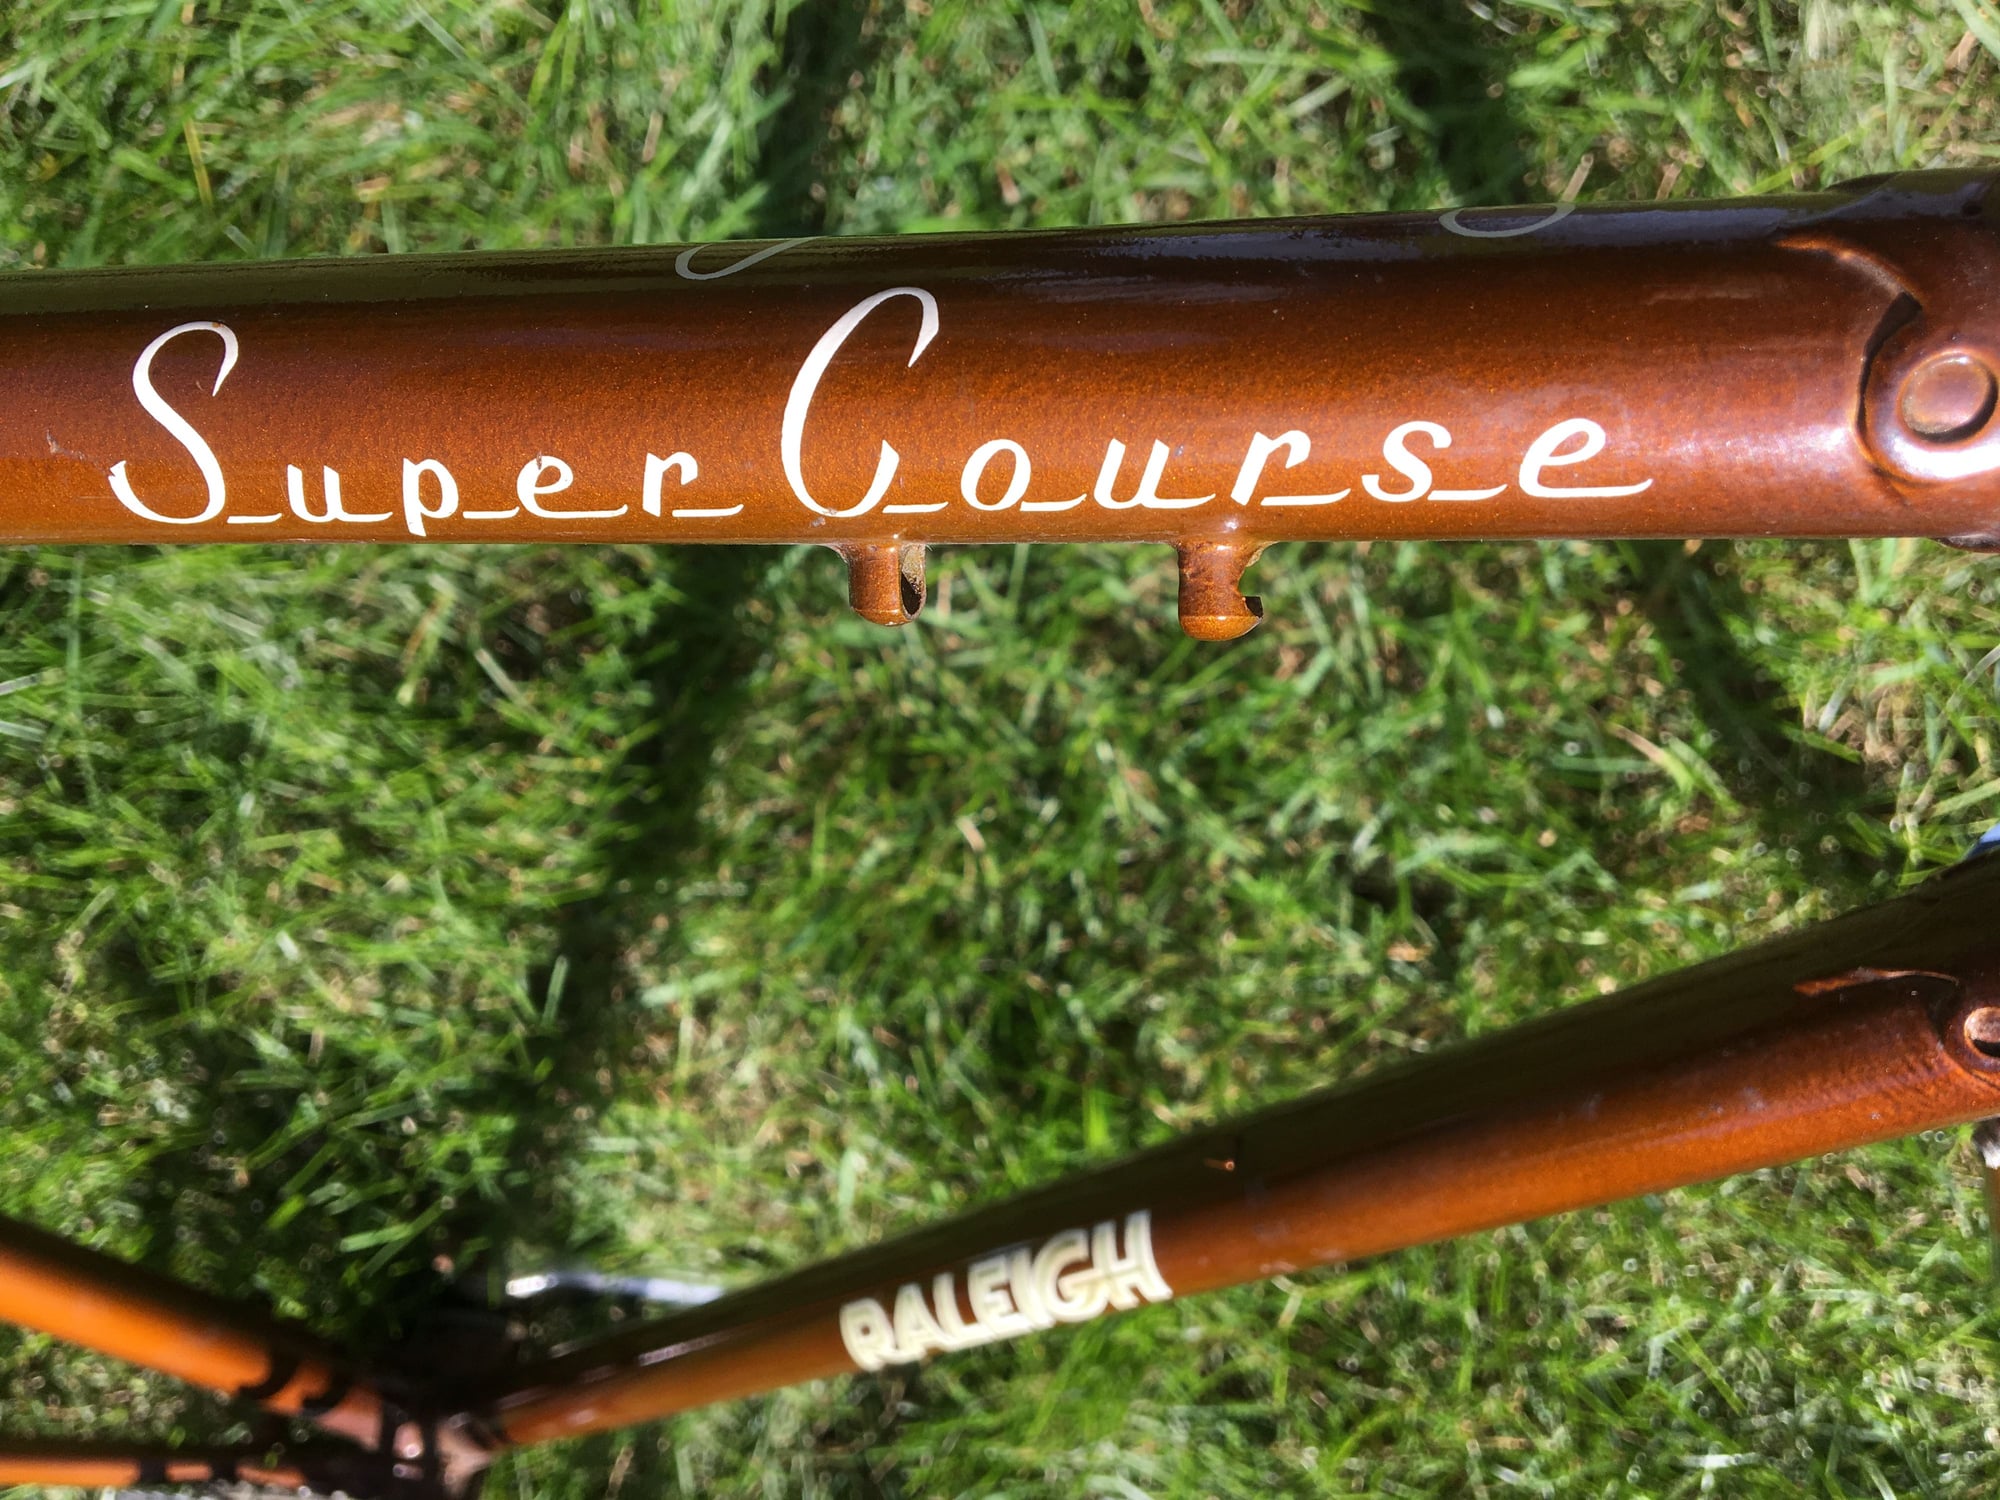 Walnut Studiolo Sew-On Leather Bicycle Bar Wraps Dark Brown